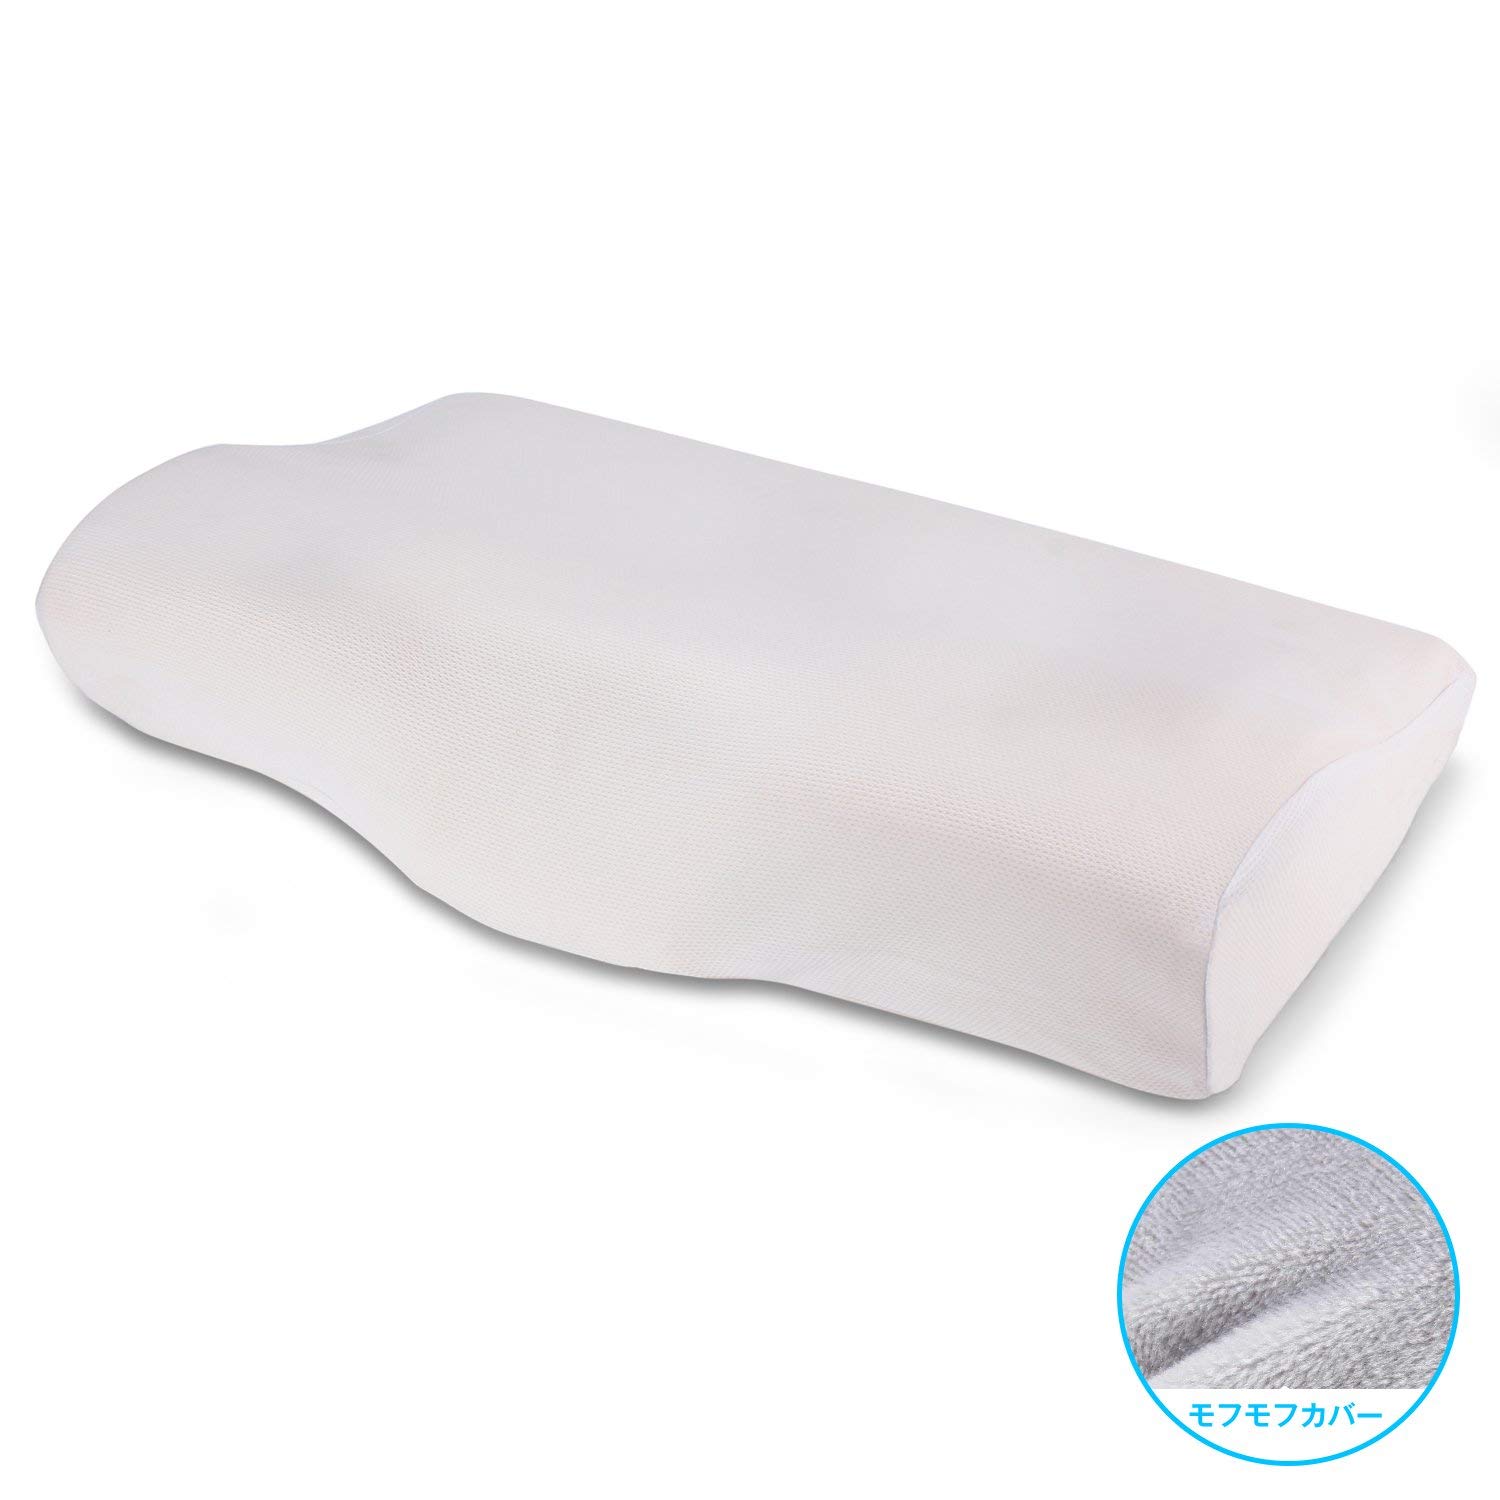 AYSHTR 低反発枕 安眠枕 健康枕 蝶型 睡眠質改善 いびき防止 頚椎ケア 疲労軽減 肩こり対策 もふもふの洗える枕カバー付き